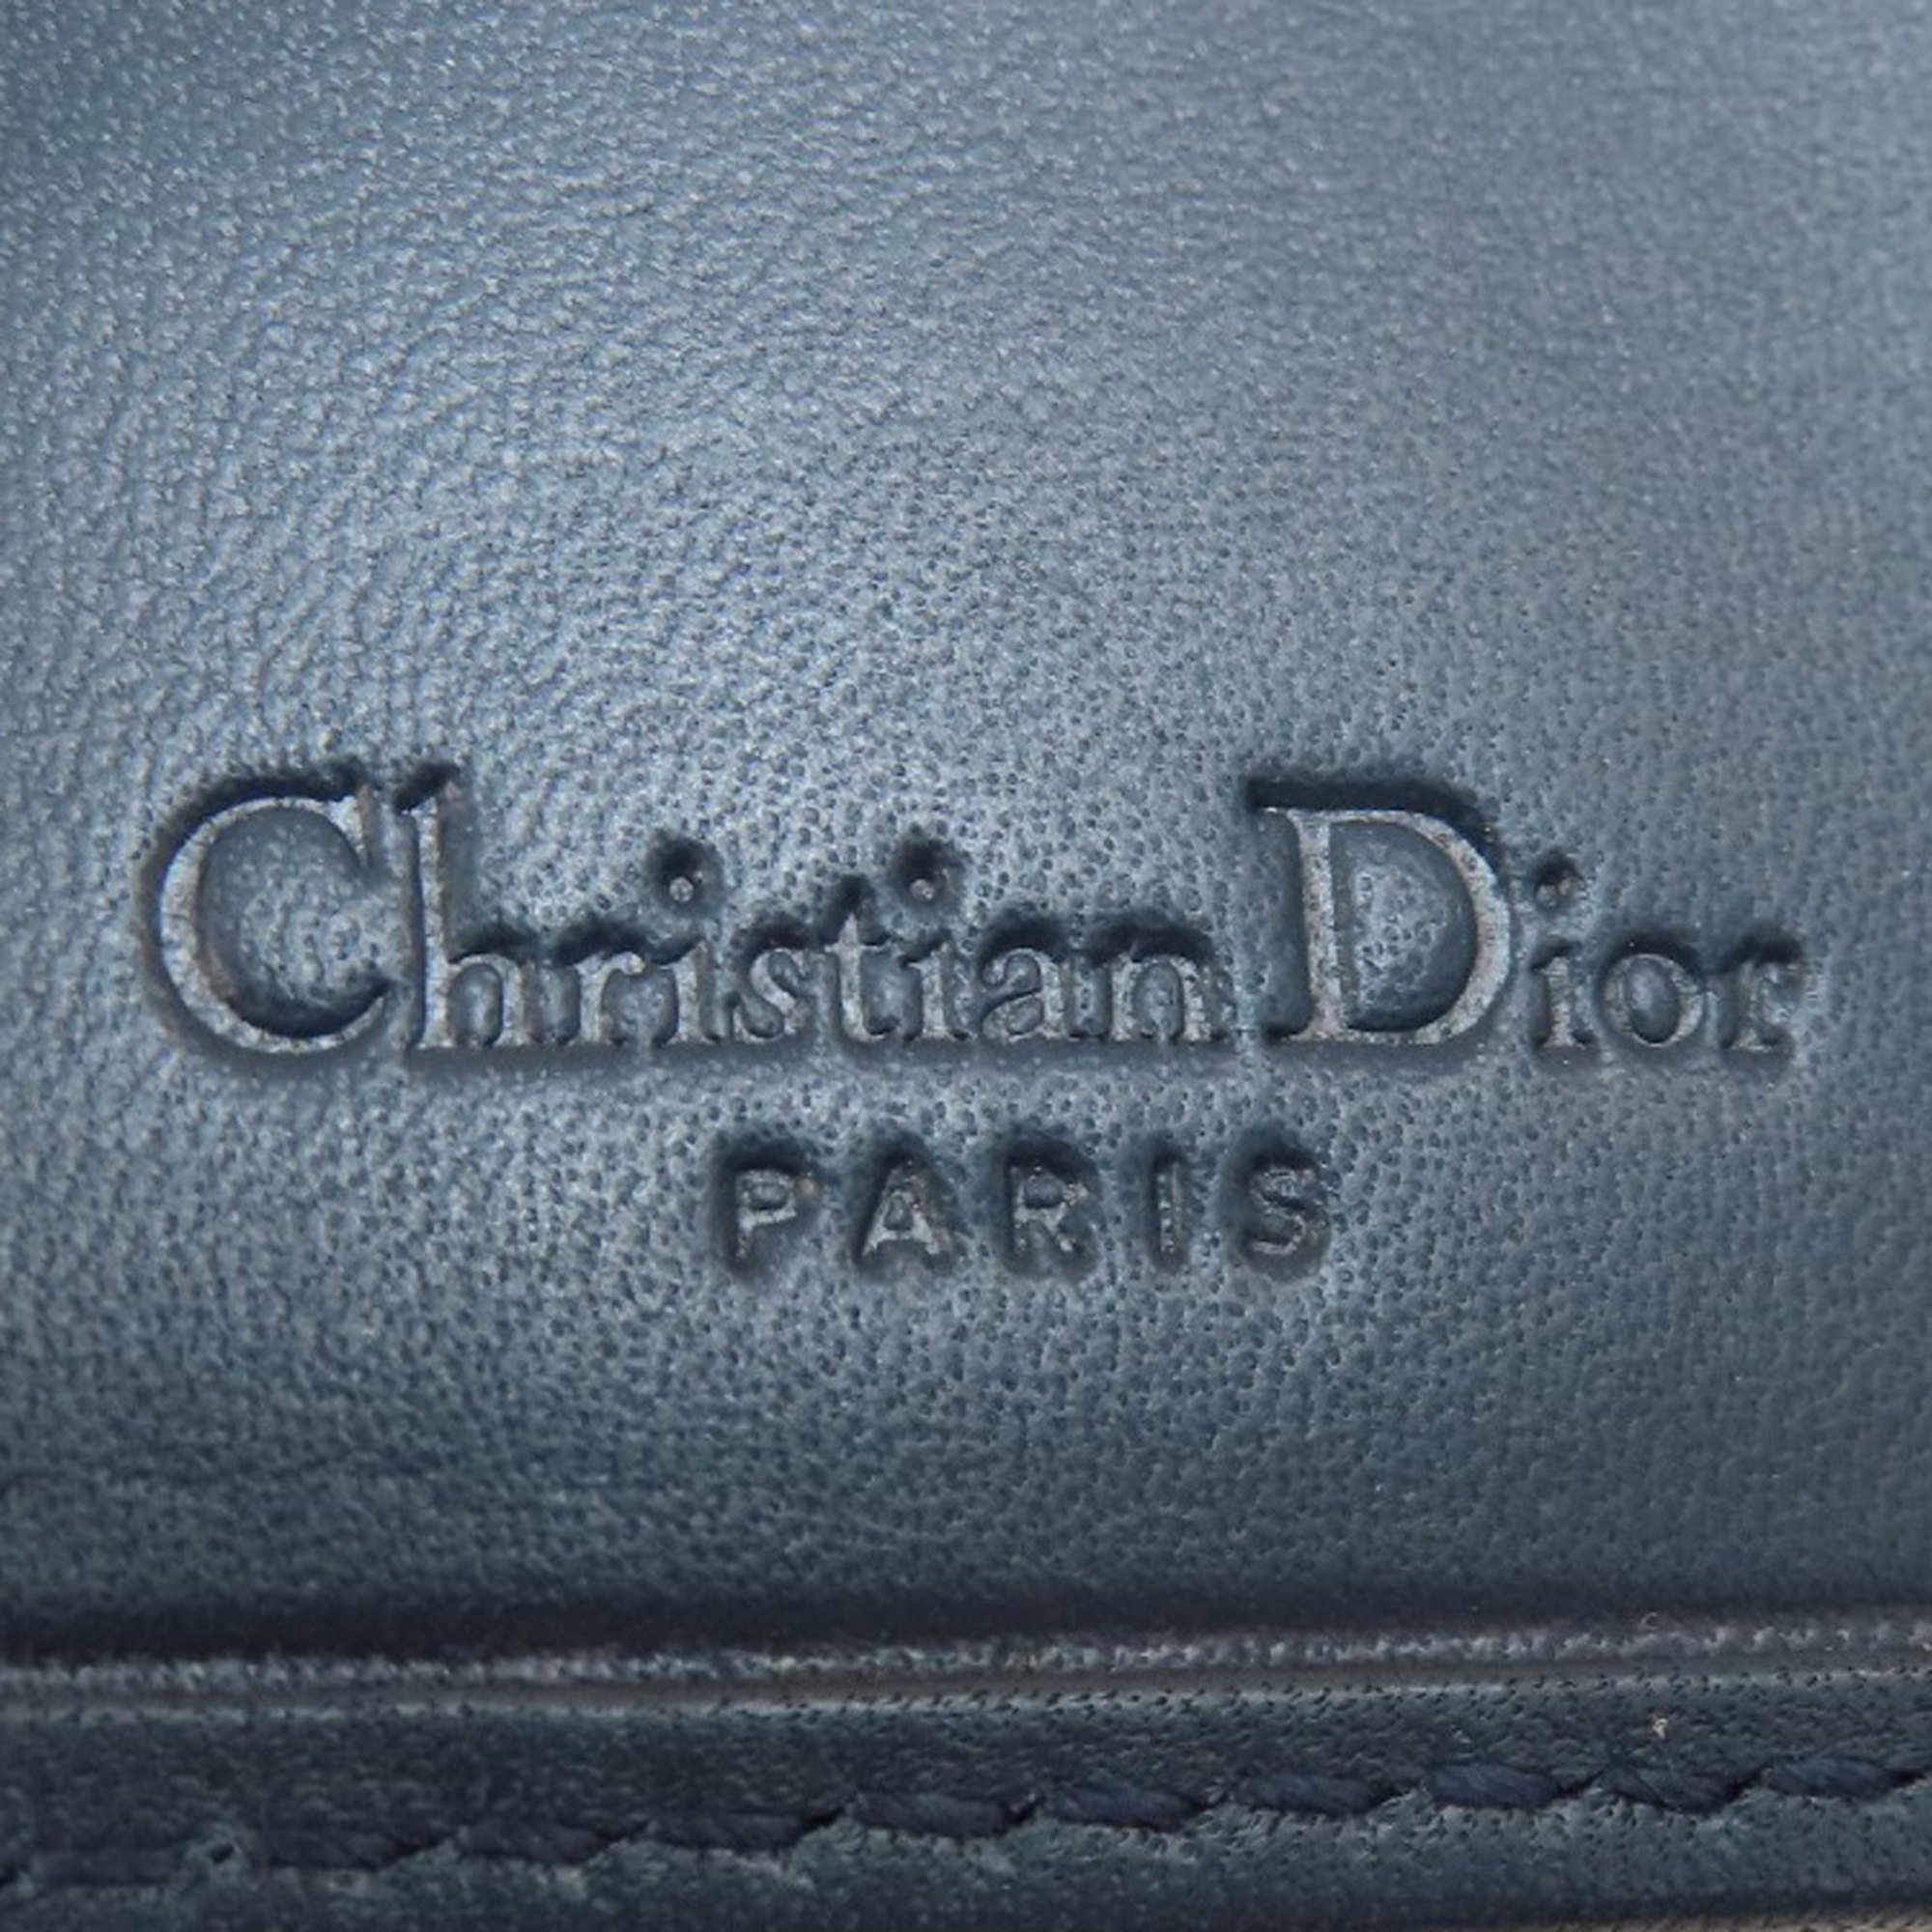 Christian Dior Trotter Pattern Bi-fold Wallet Canvas Women's